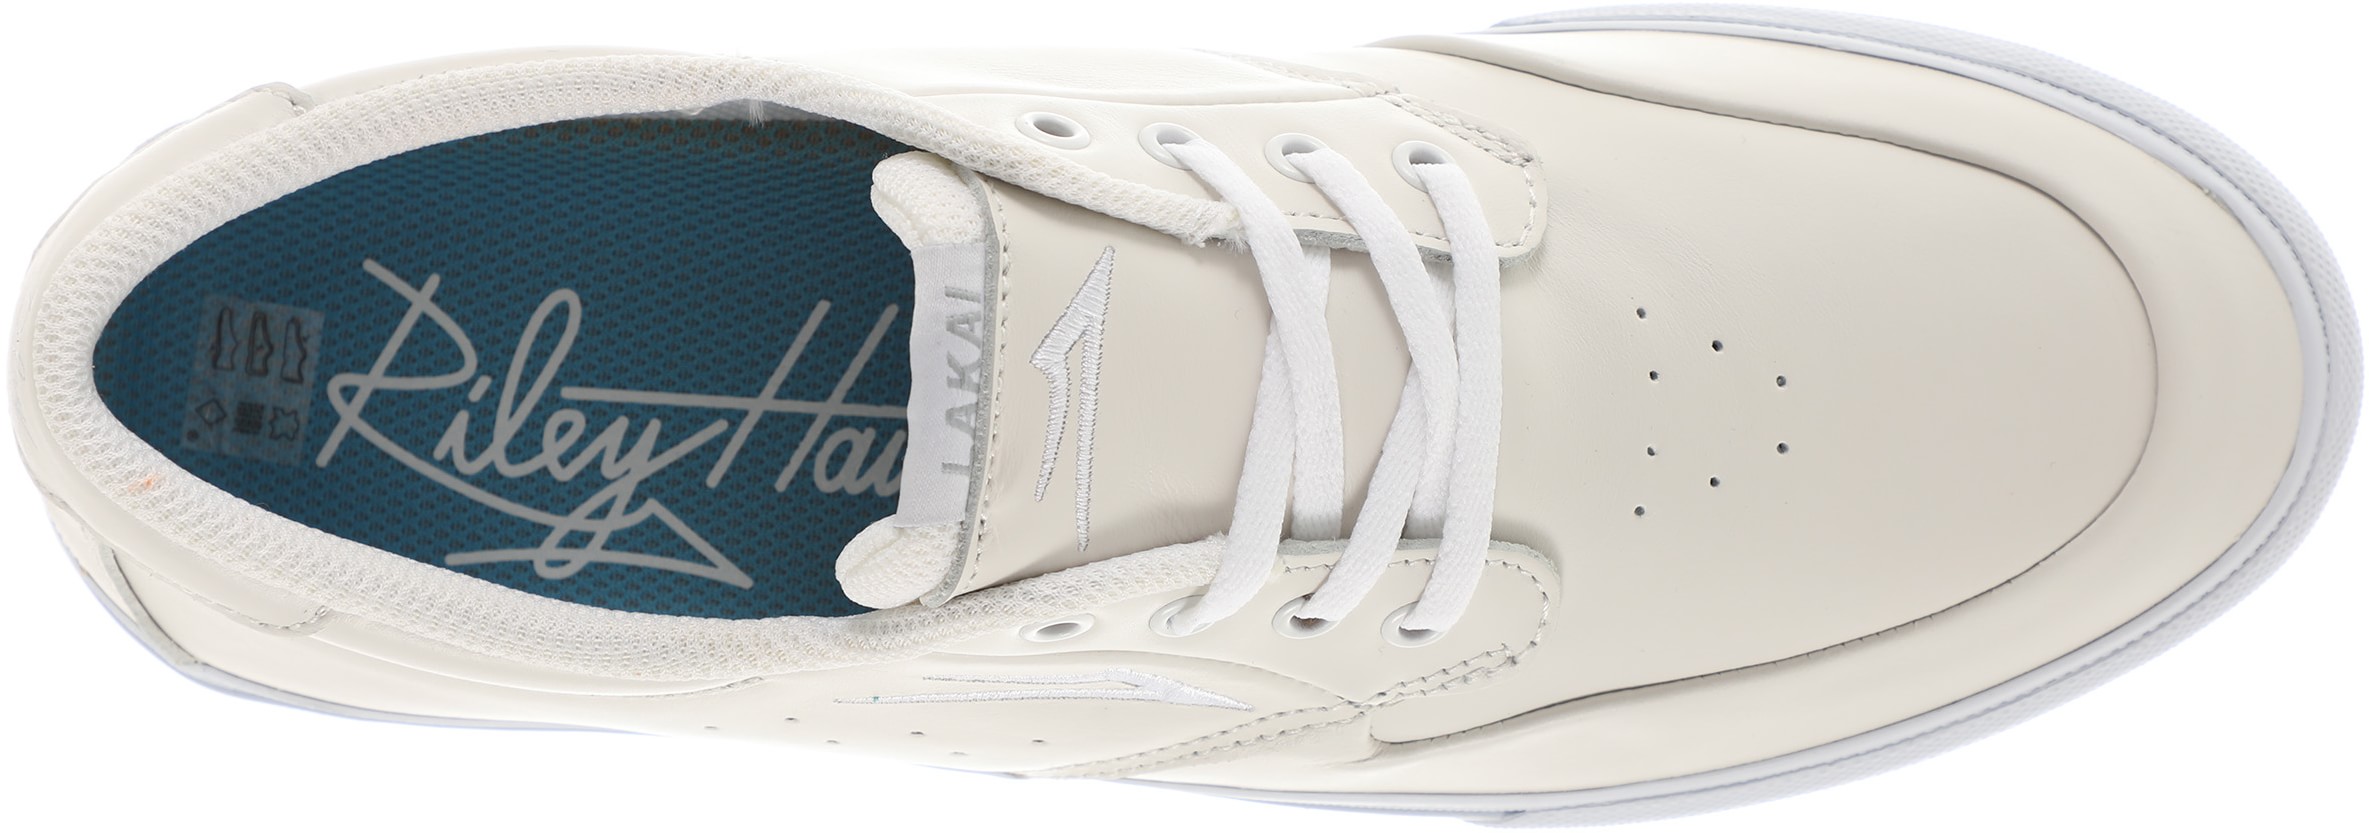 Lakai Riley 3 Skate Shoes - white leather | Tactics